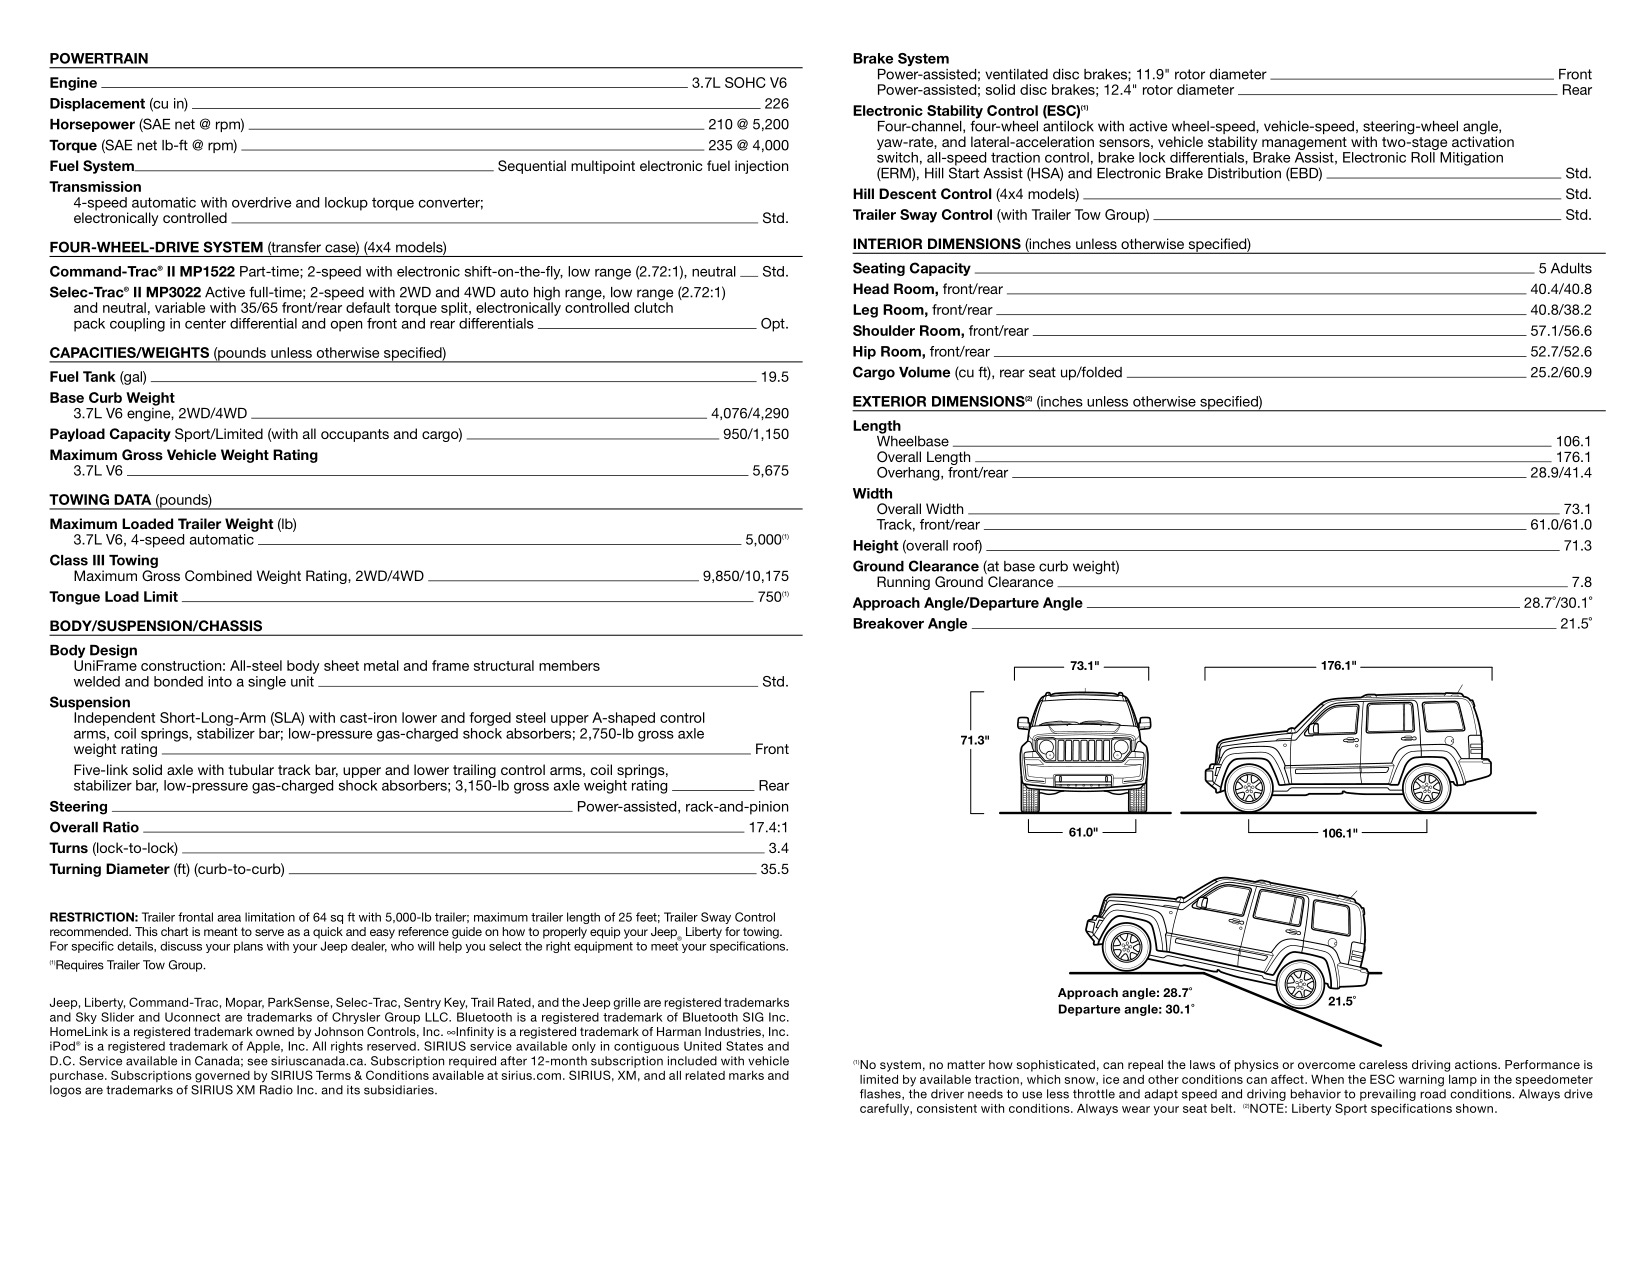 2010 Jeep Liberty Brochure Page 2